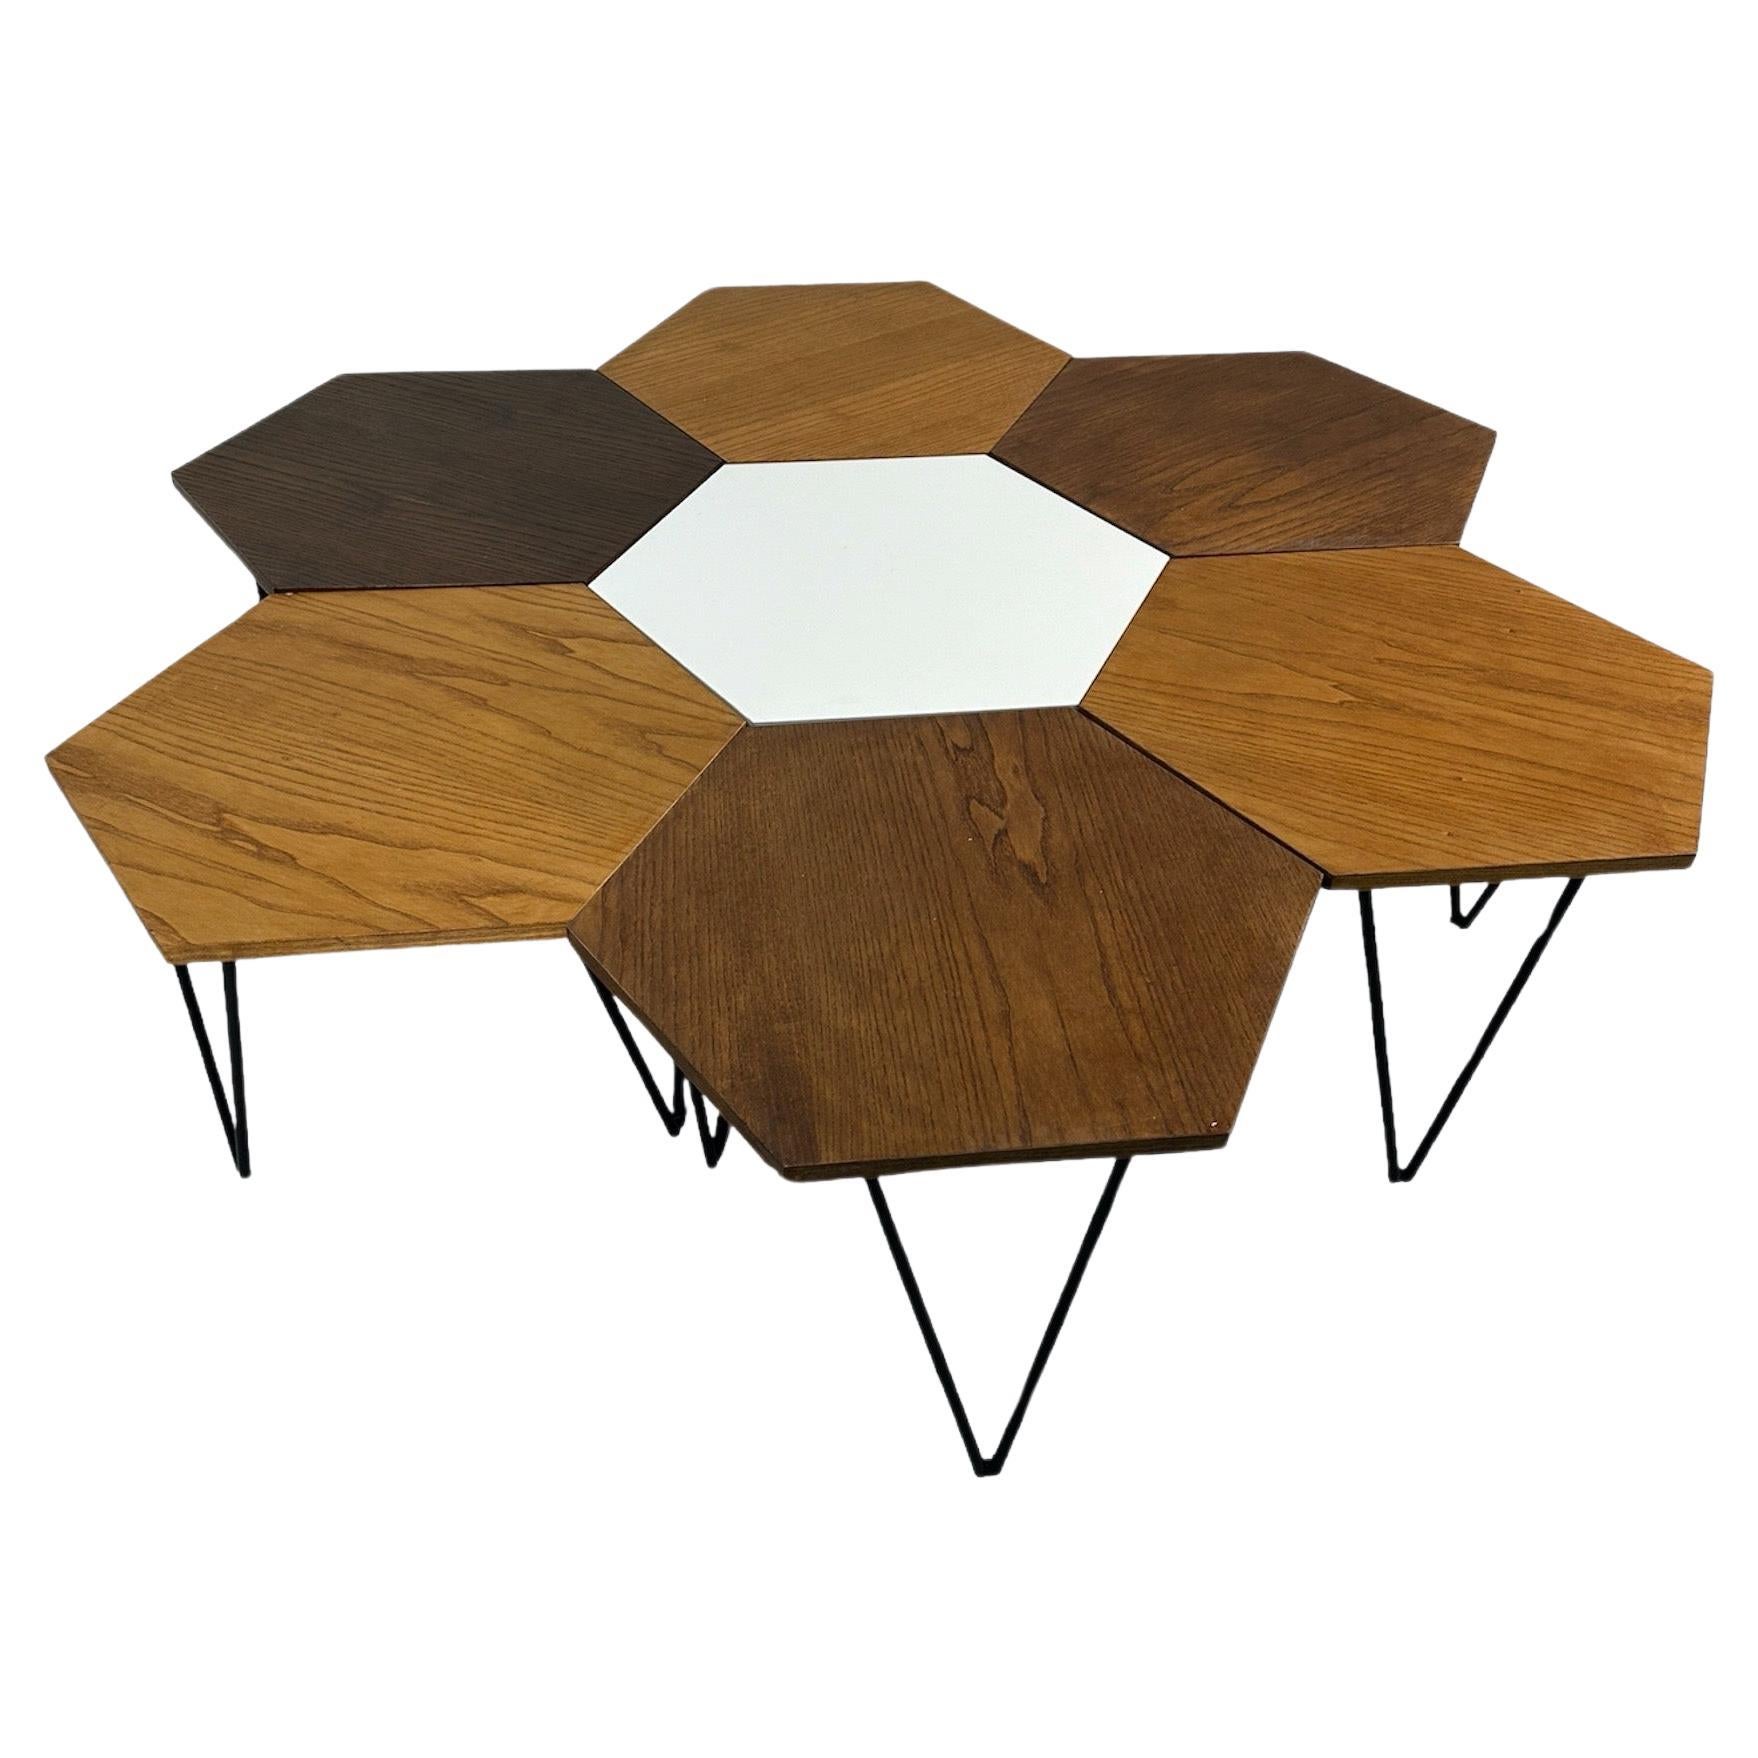 Set of 7 Gio Ponti Modular Hexagonal Coffee Tables, ISA Bergamo, Italy, 1950s For Sale